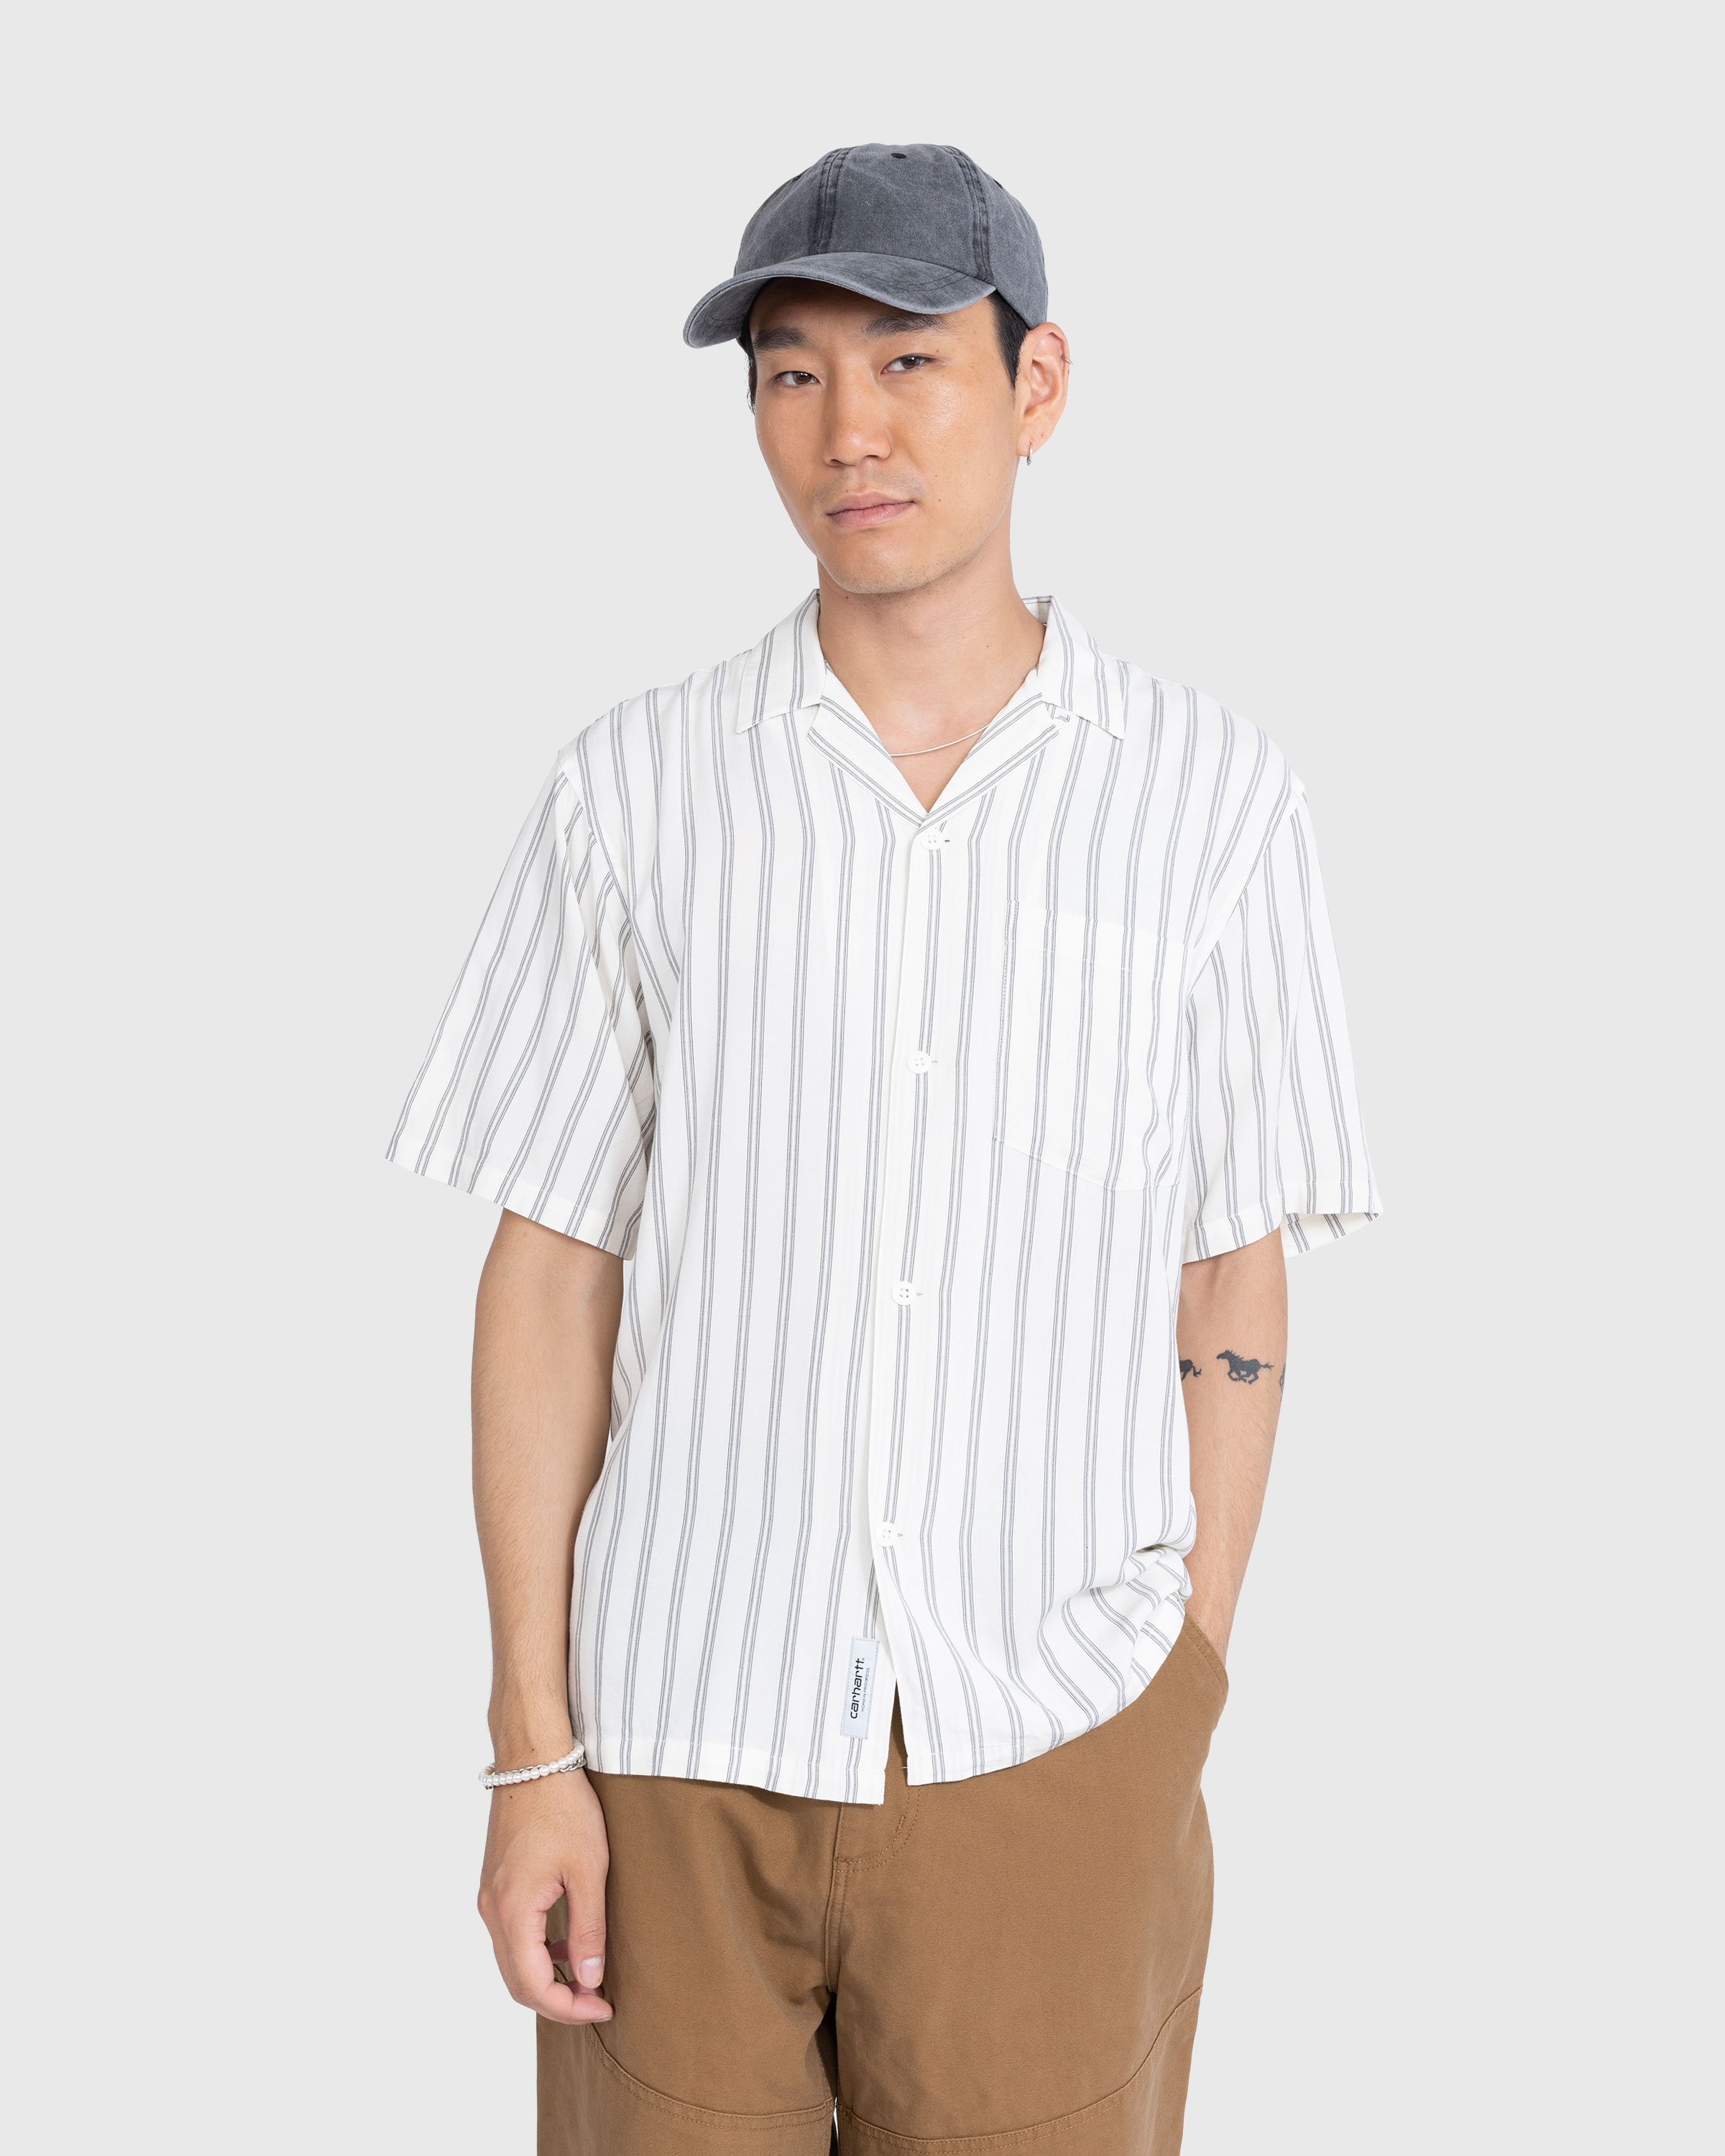 Carhartt WIP - Reyes Stripe Shirt Wax - Clothing - Beige - Image 2